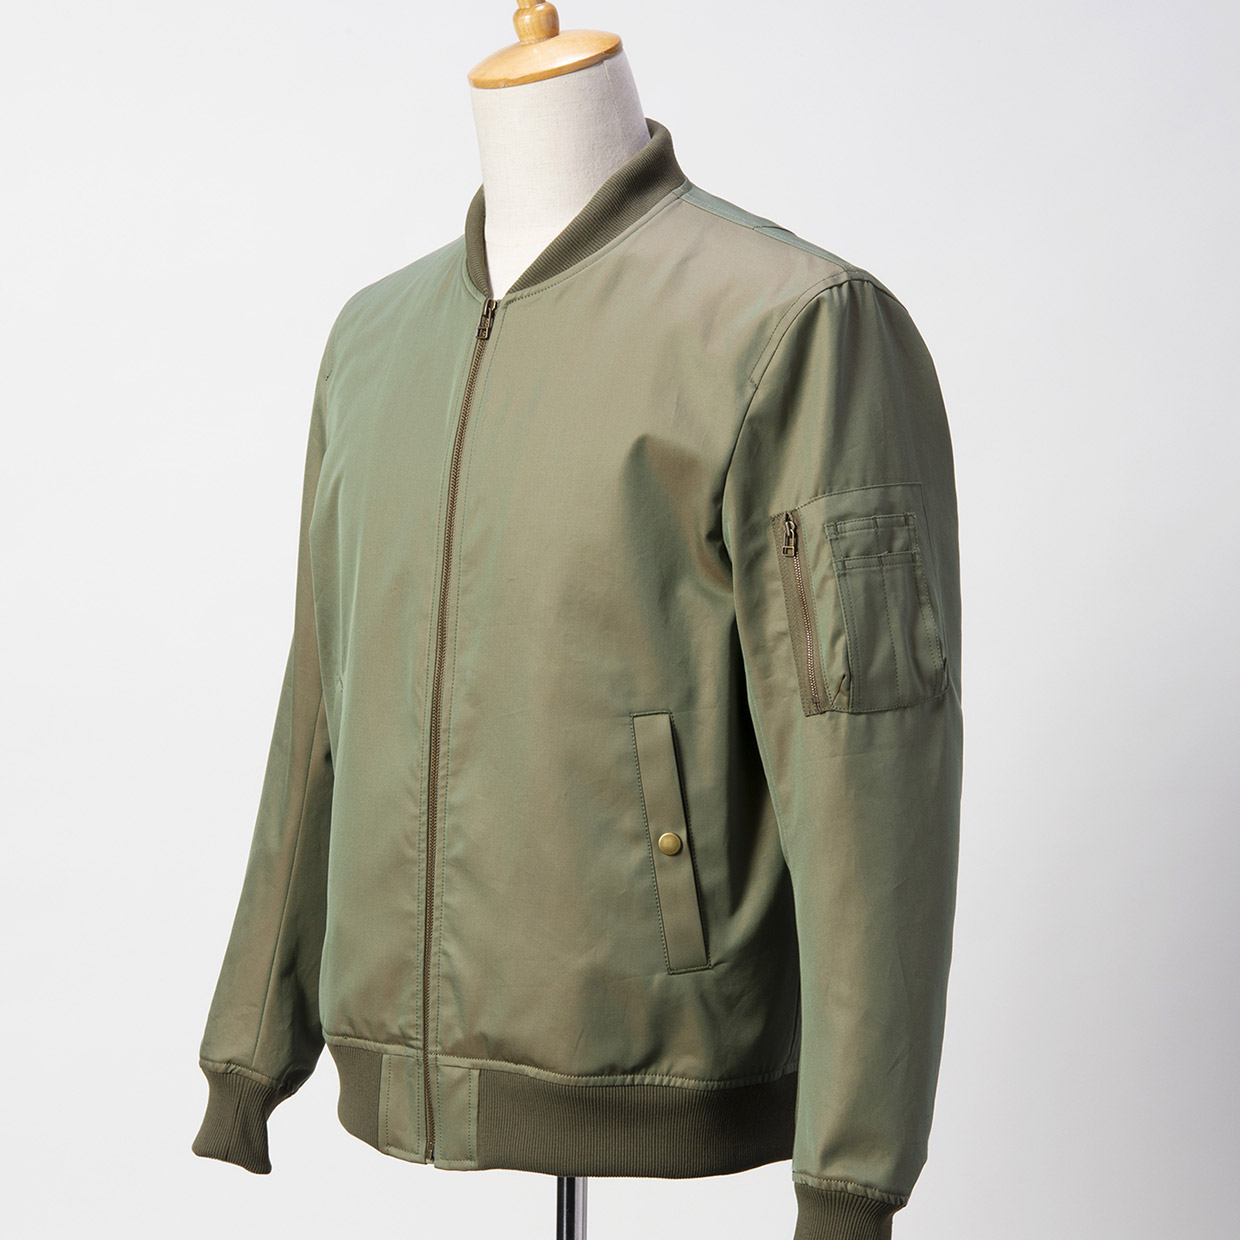 Unisex MA-1 jacket｜日本製上質コートのファクトリーブランド 